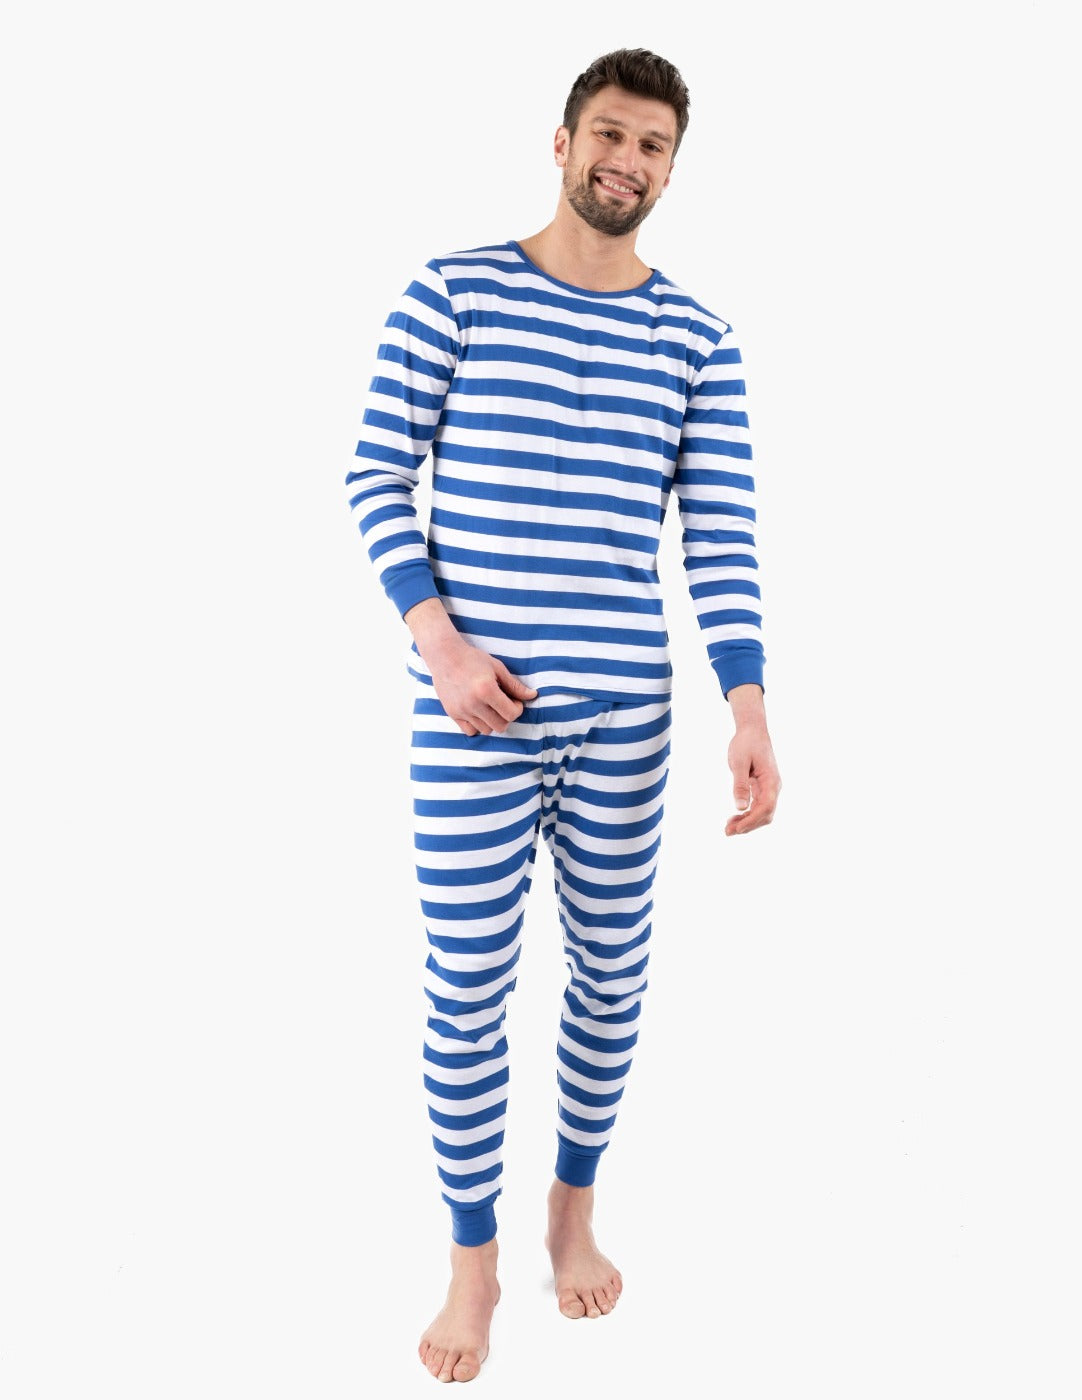 Mens Blue & White Stripes Pajamas